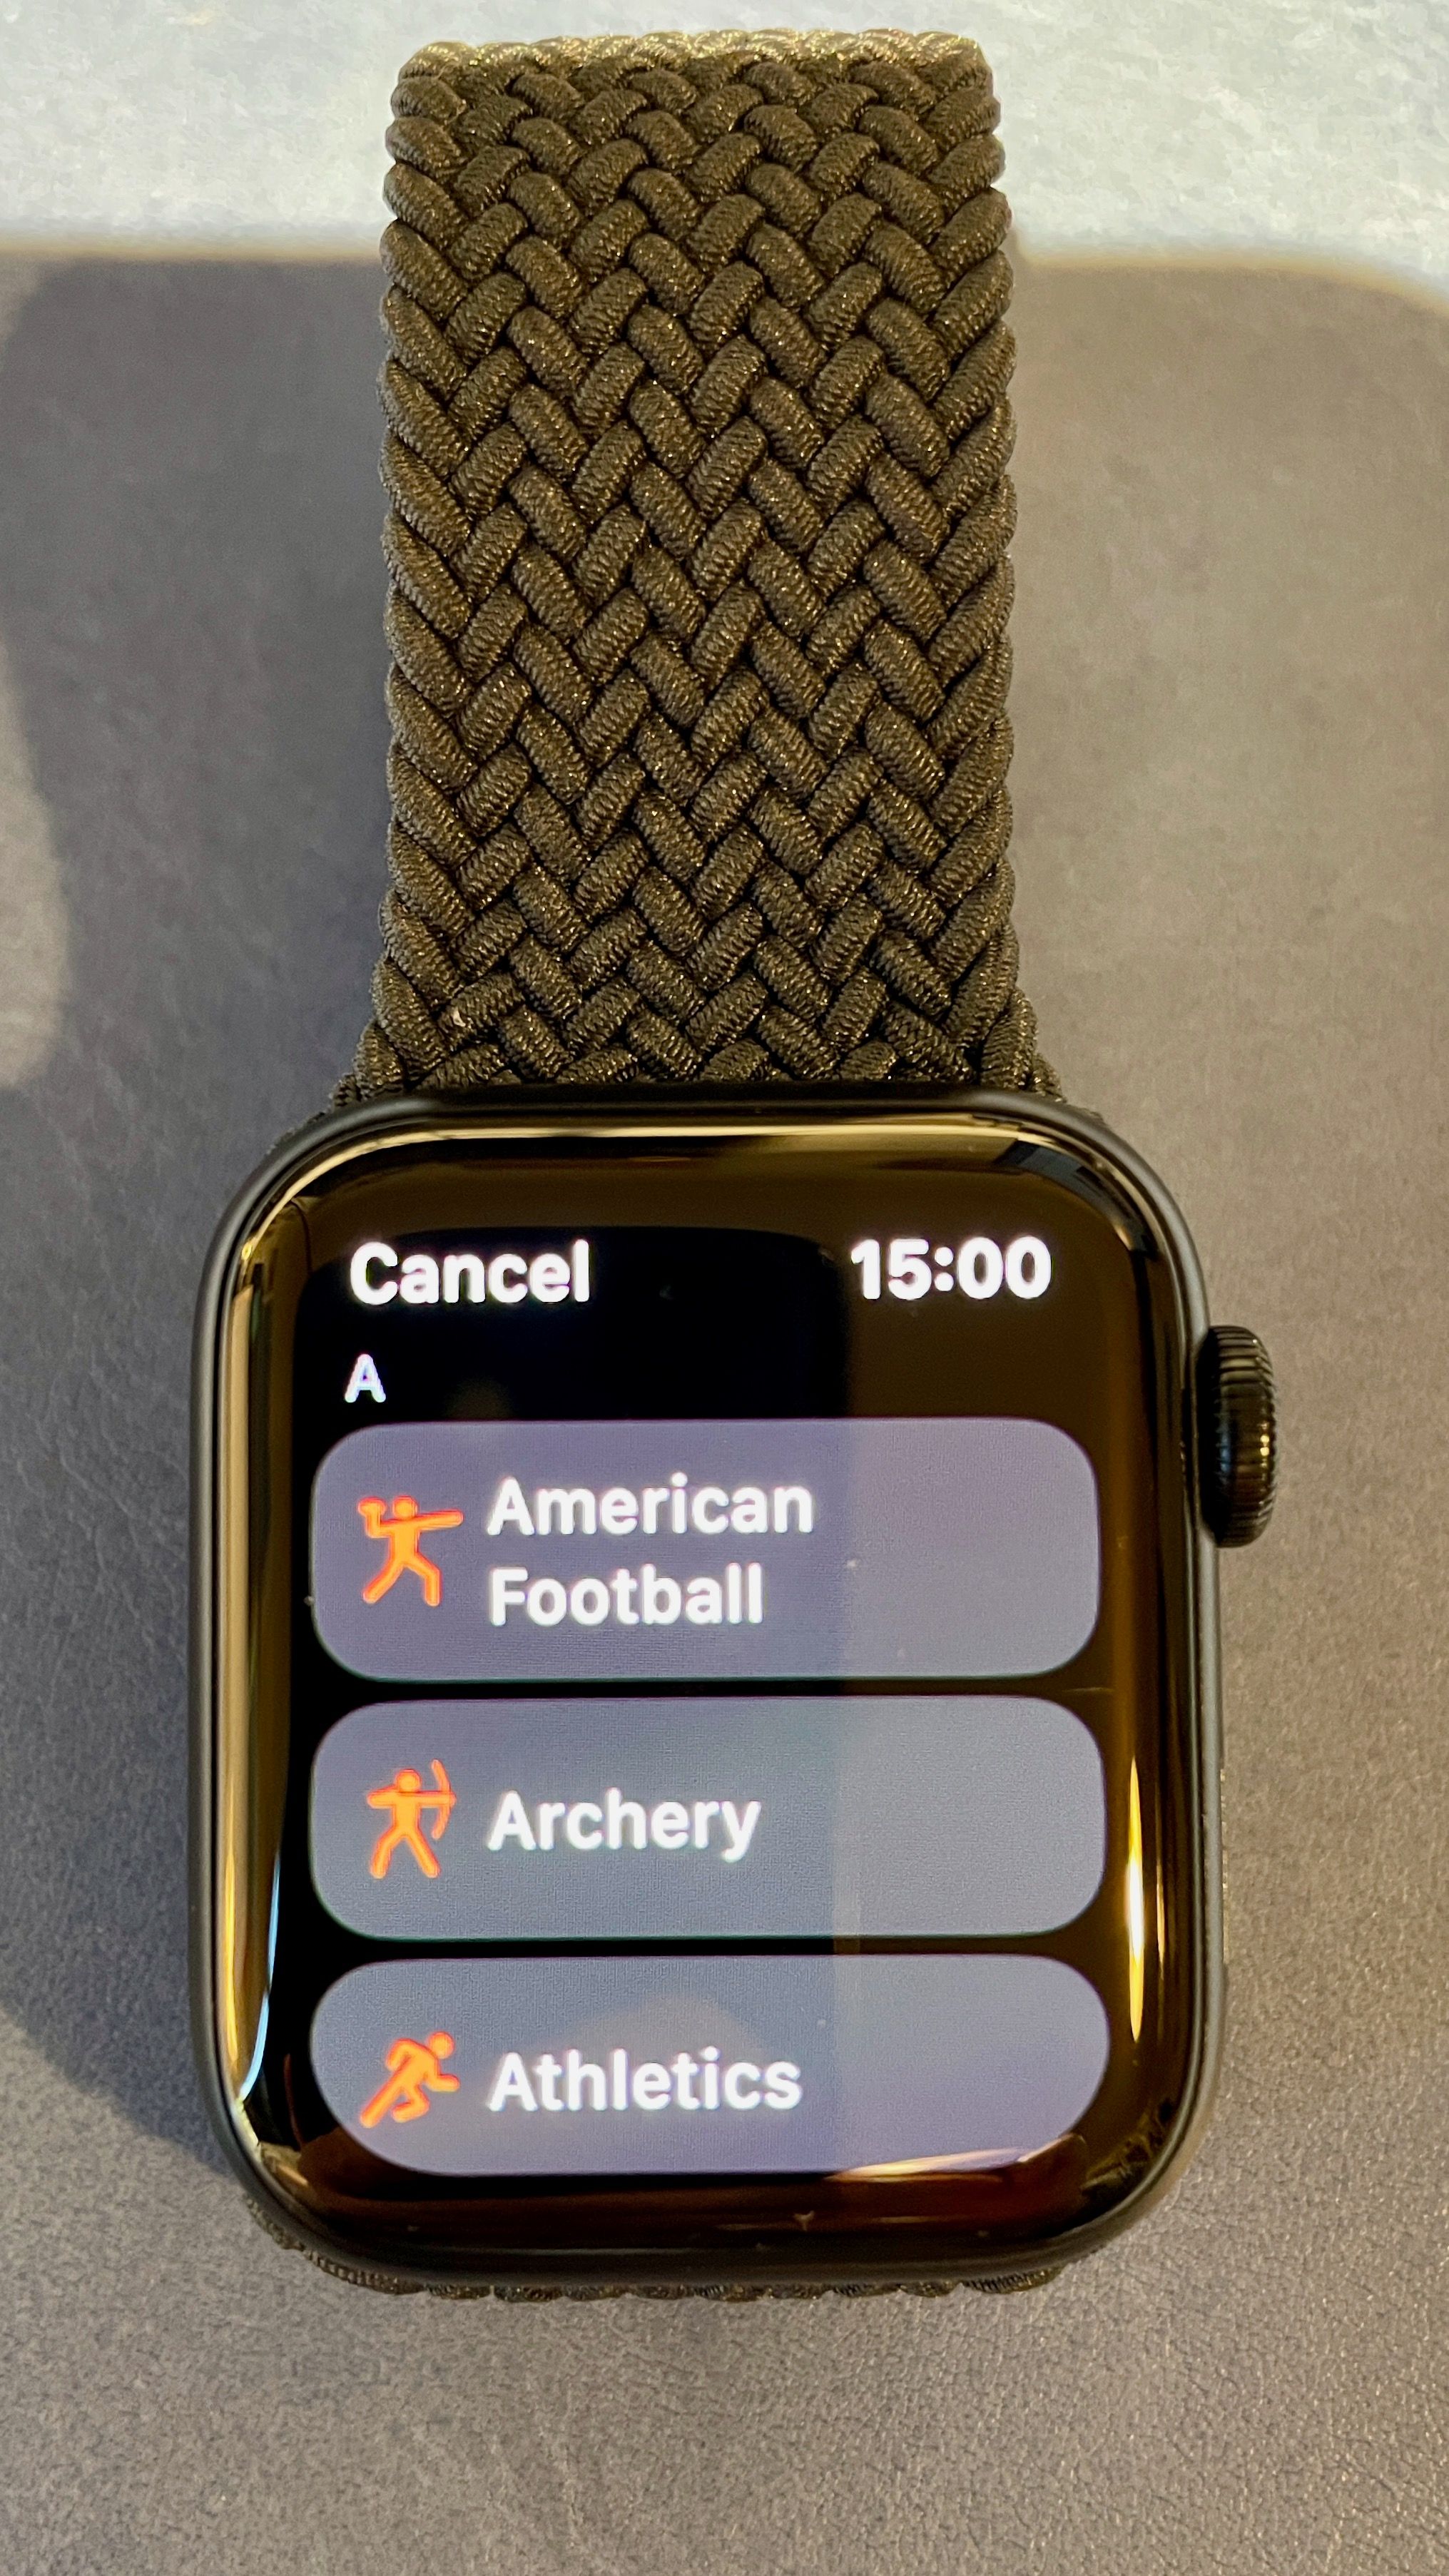 Image of Gentler Streak Apple Watch workout type selection